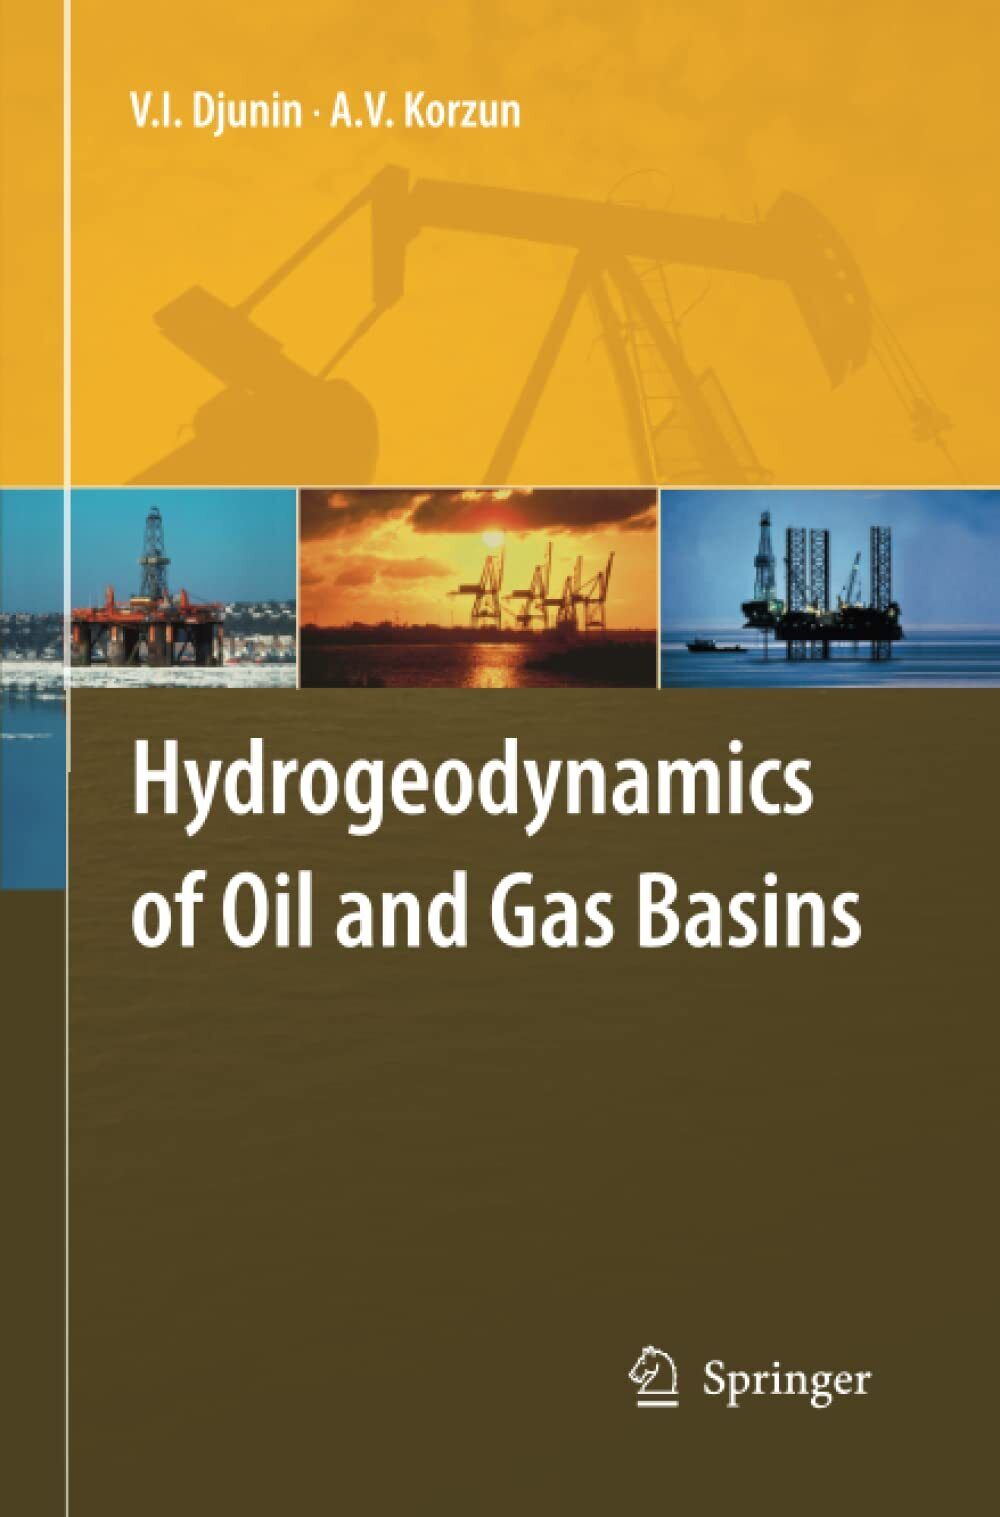 Hydrogeodynamics of Oil and Gas Basins - V.I. Djunin - Springer, 2014